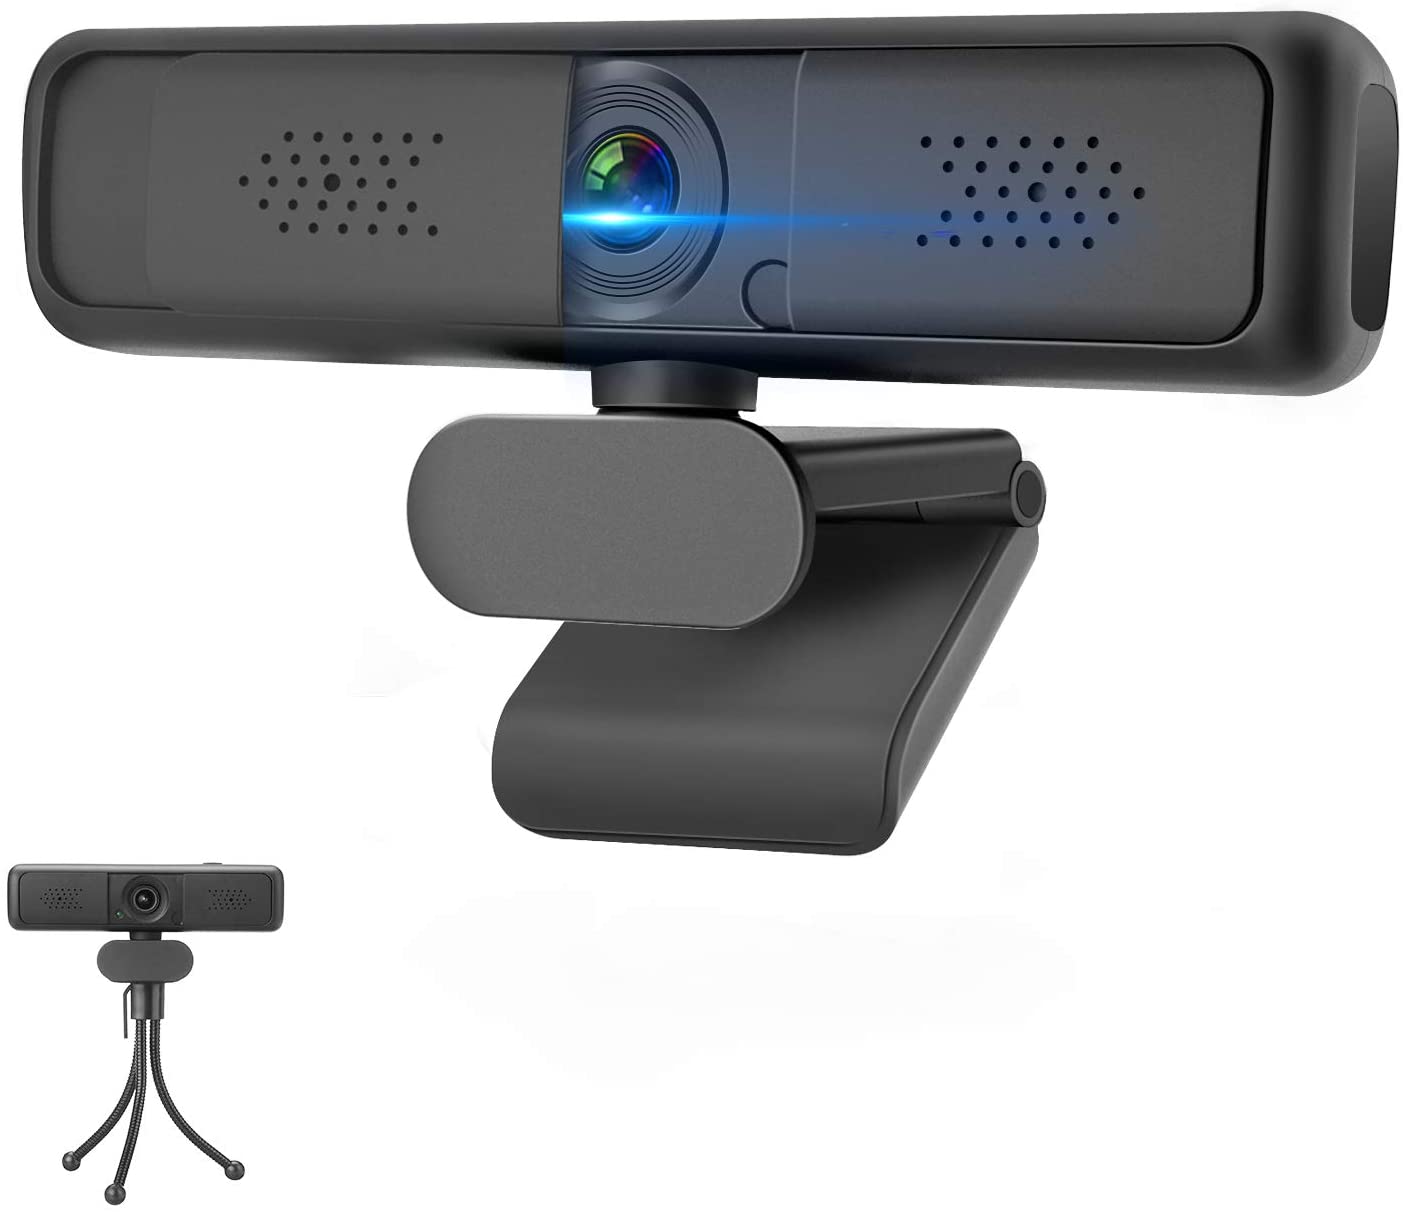 Bild zu MECO ELEVERDE 2K Full-HD 1440P Webcam mit Stereo-Mikrofon für 11,99€ dank 70% Rabatt